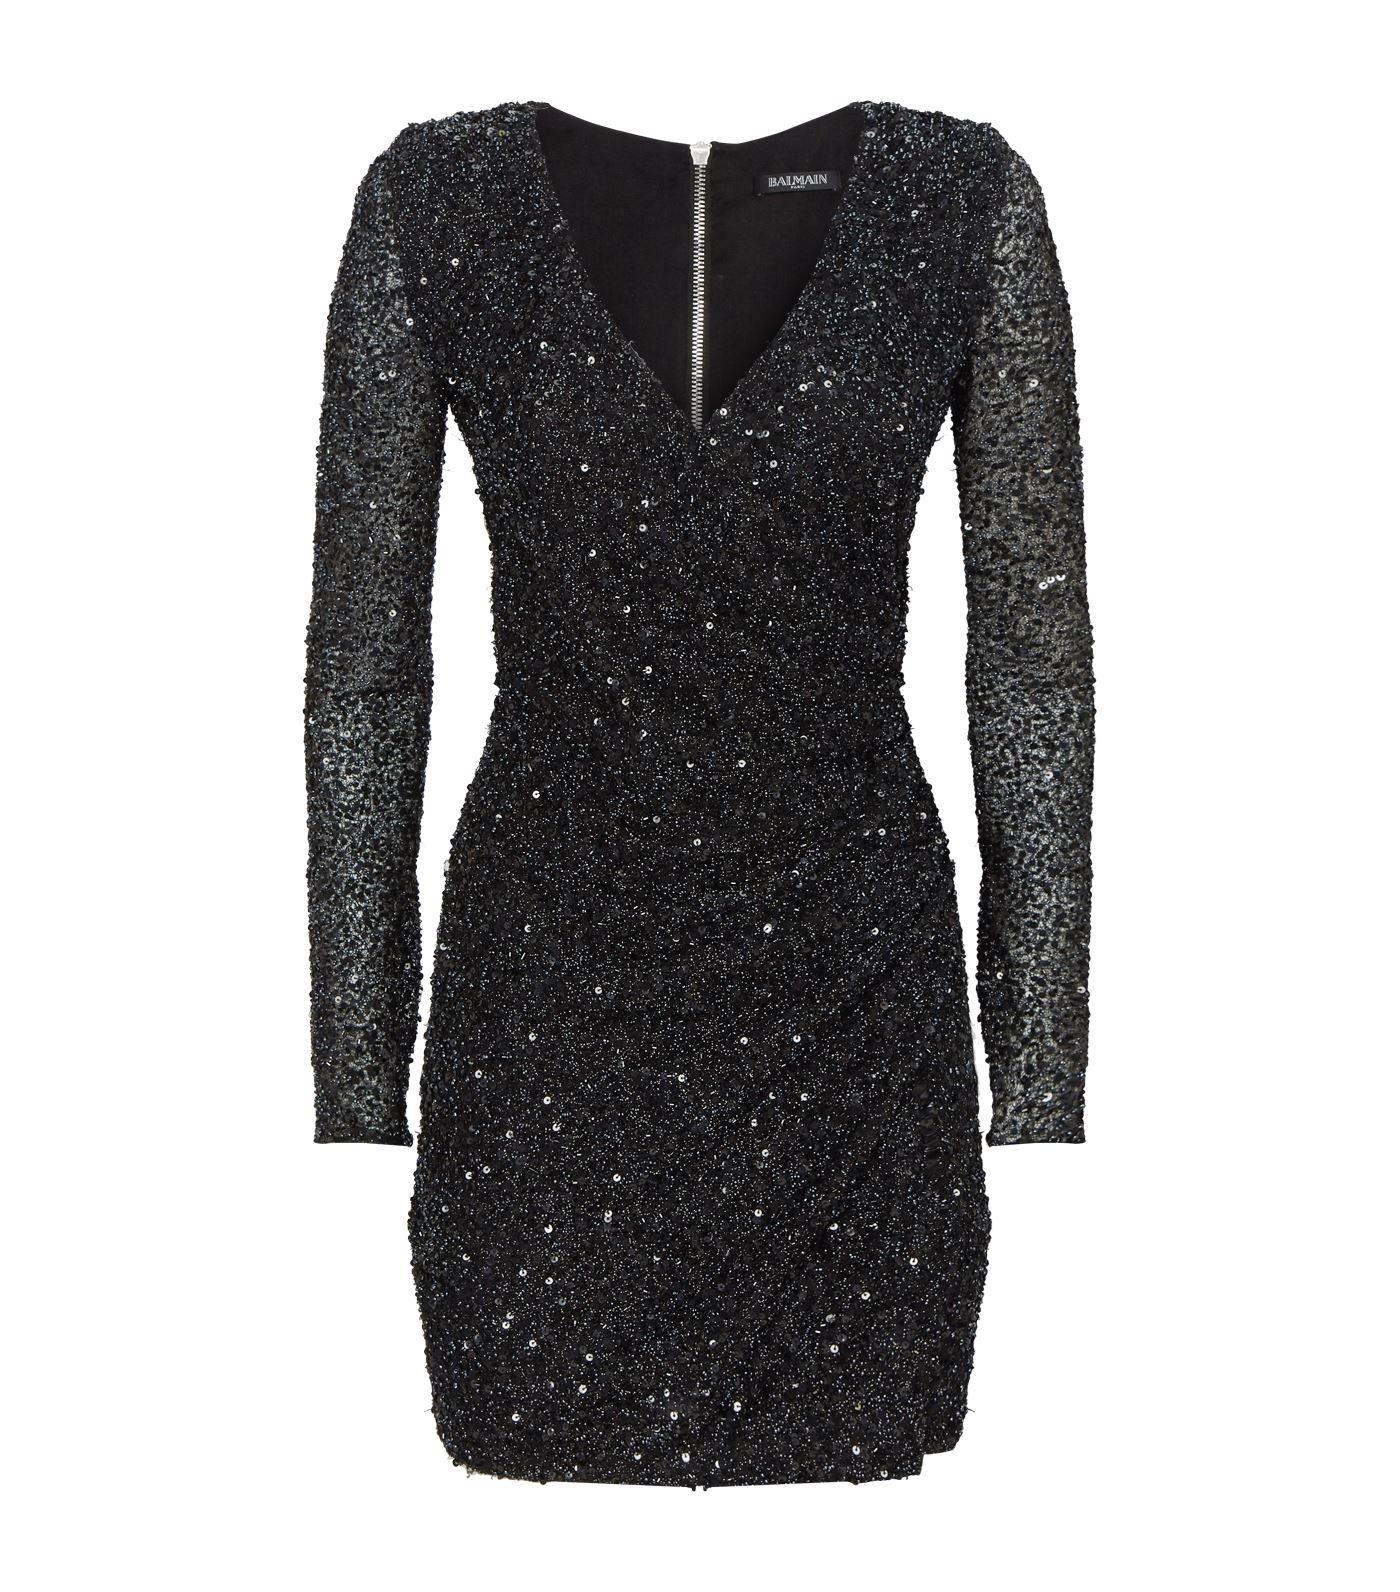 Balmain Sequin-embellished Mini Dress in Black - Lyst